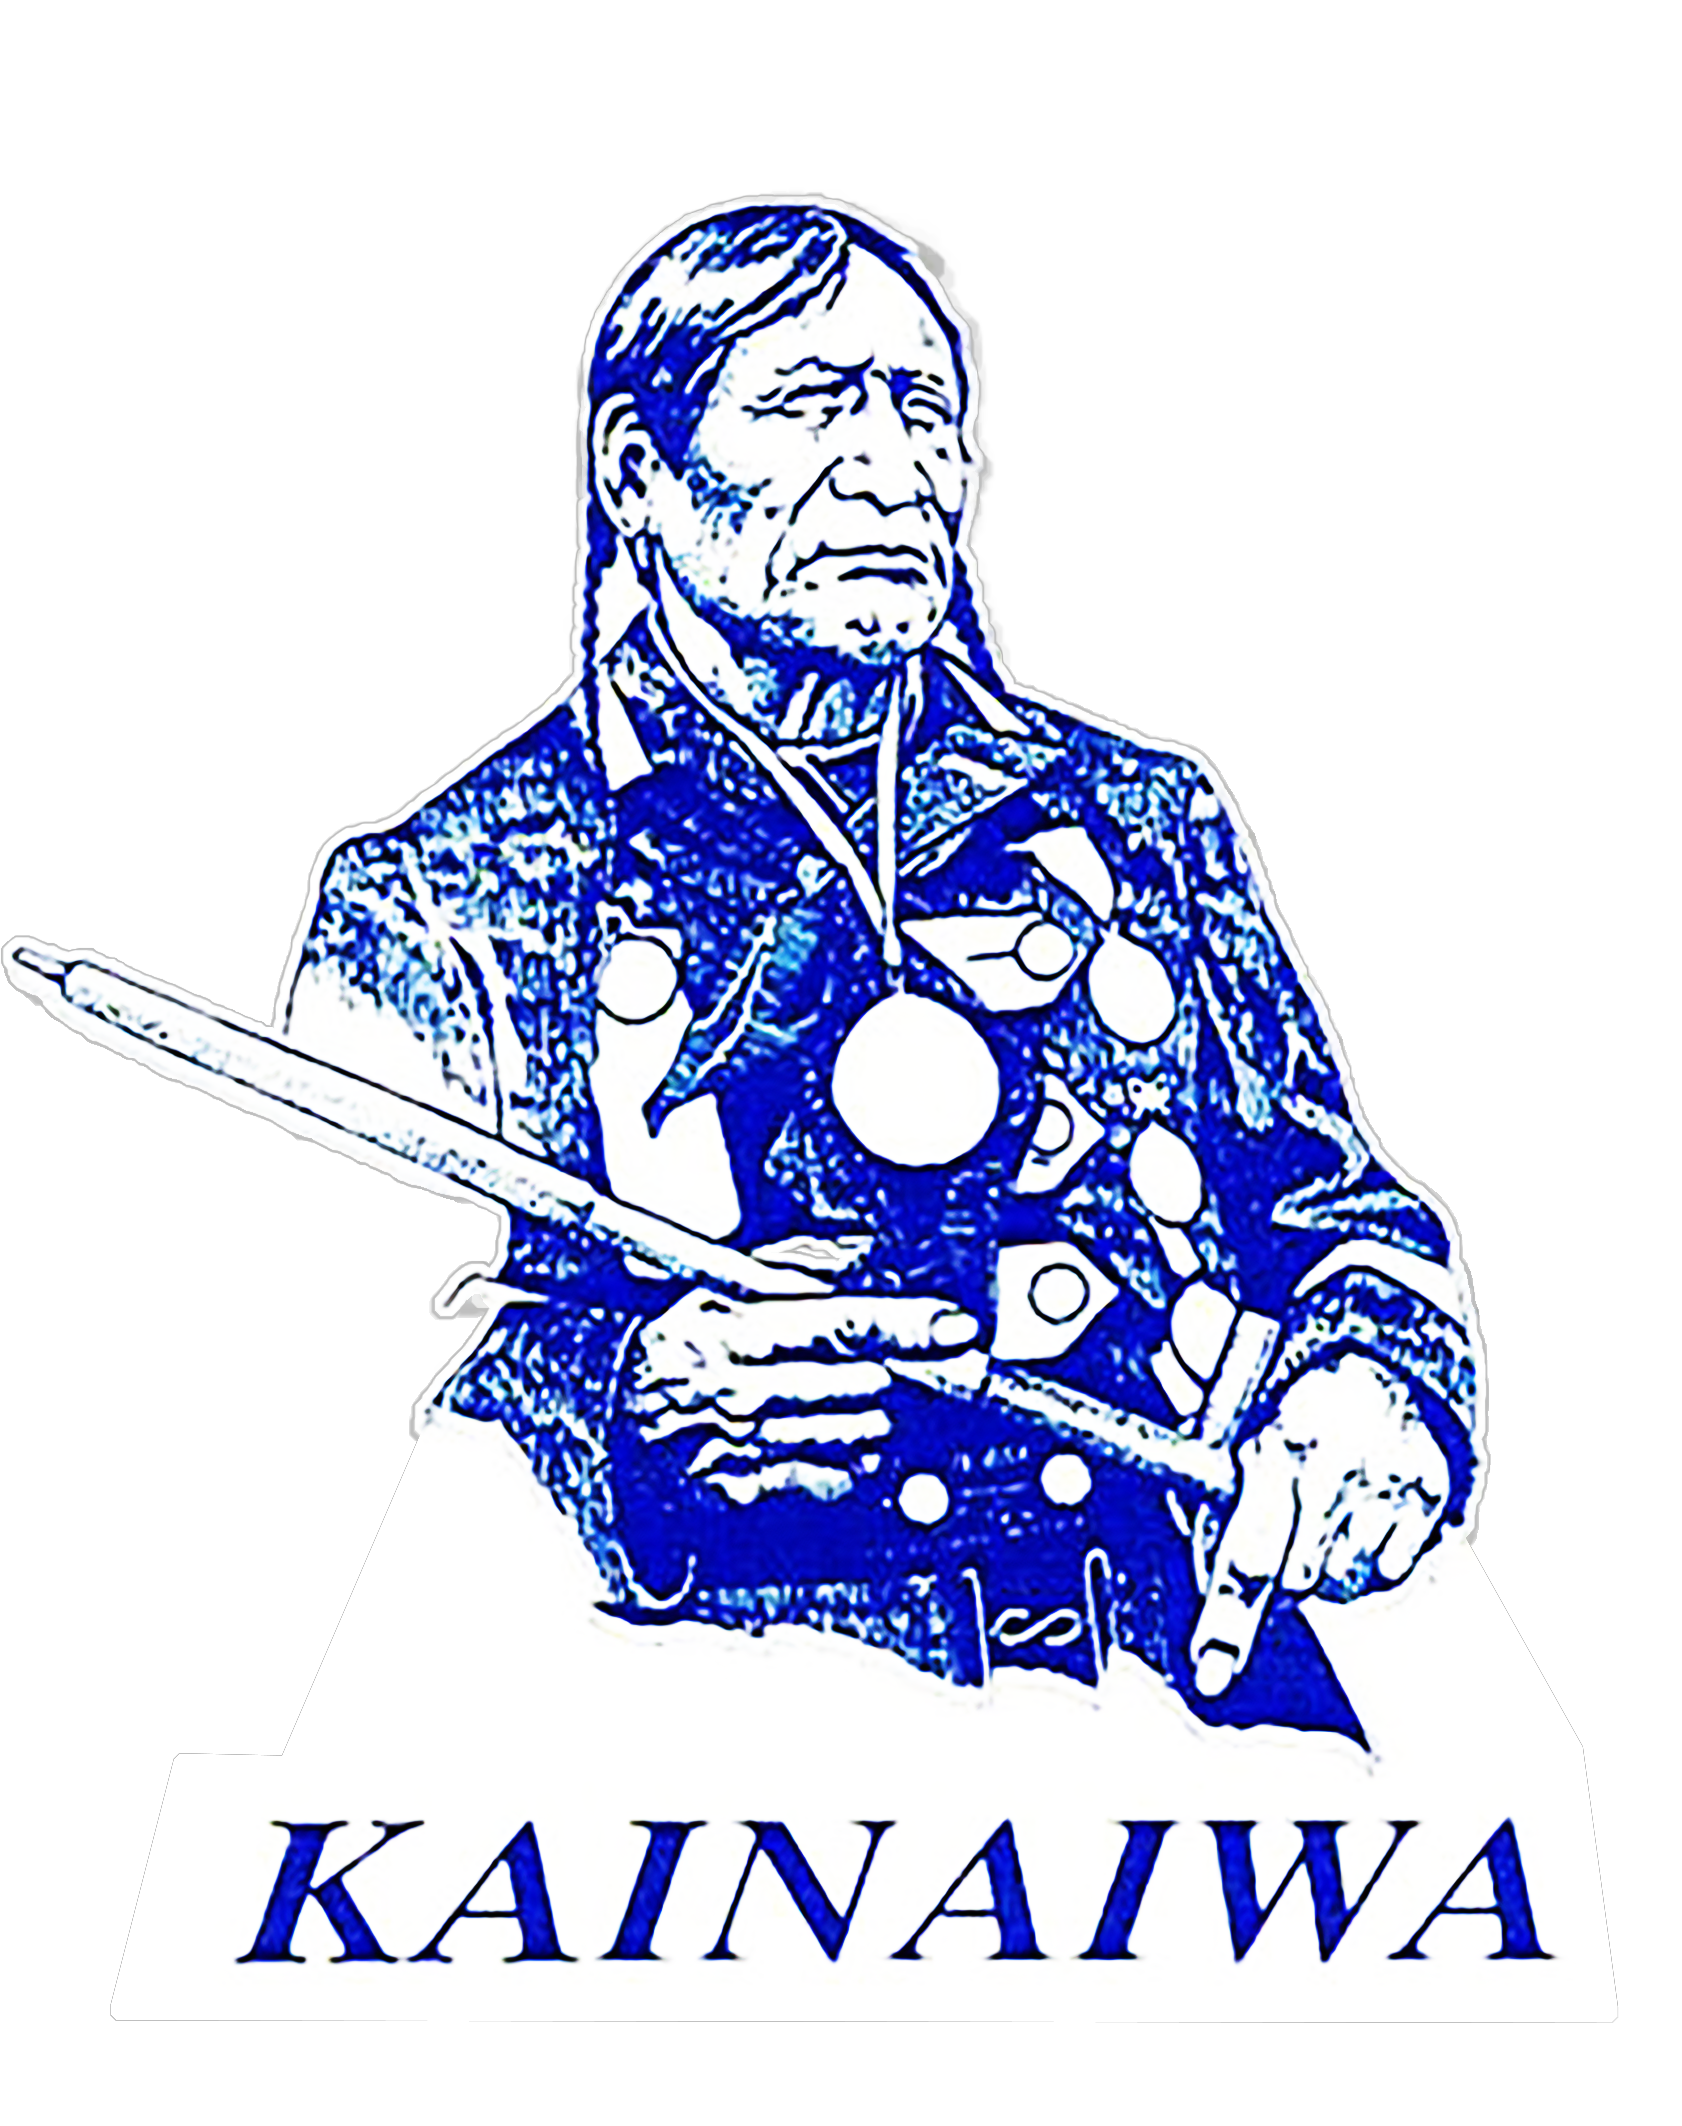 6-Inch Kainaiwa Heat Applique